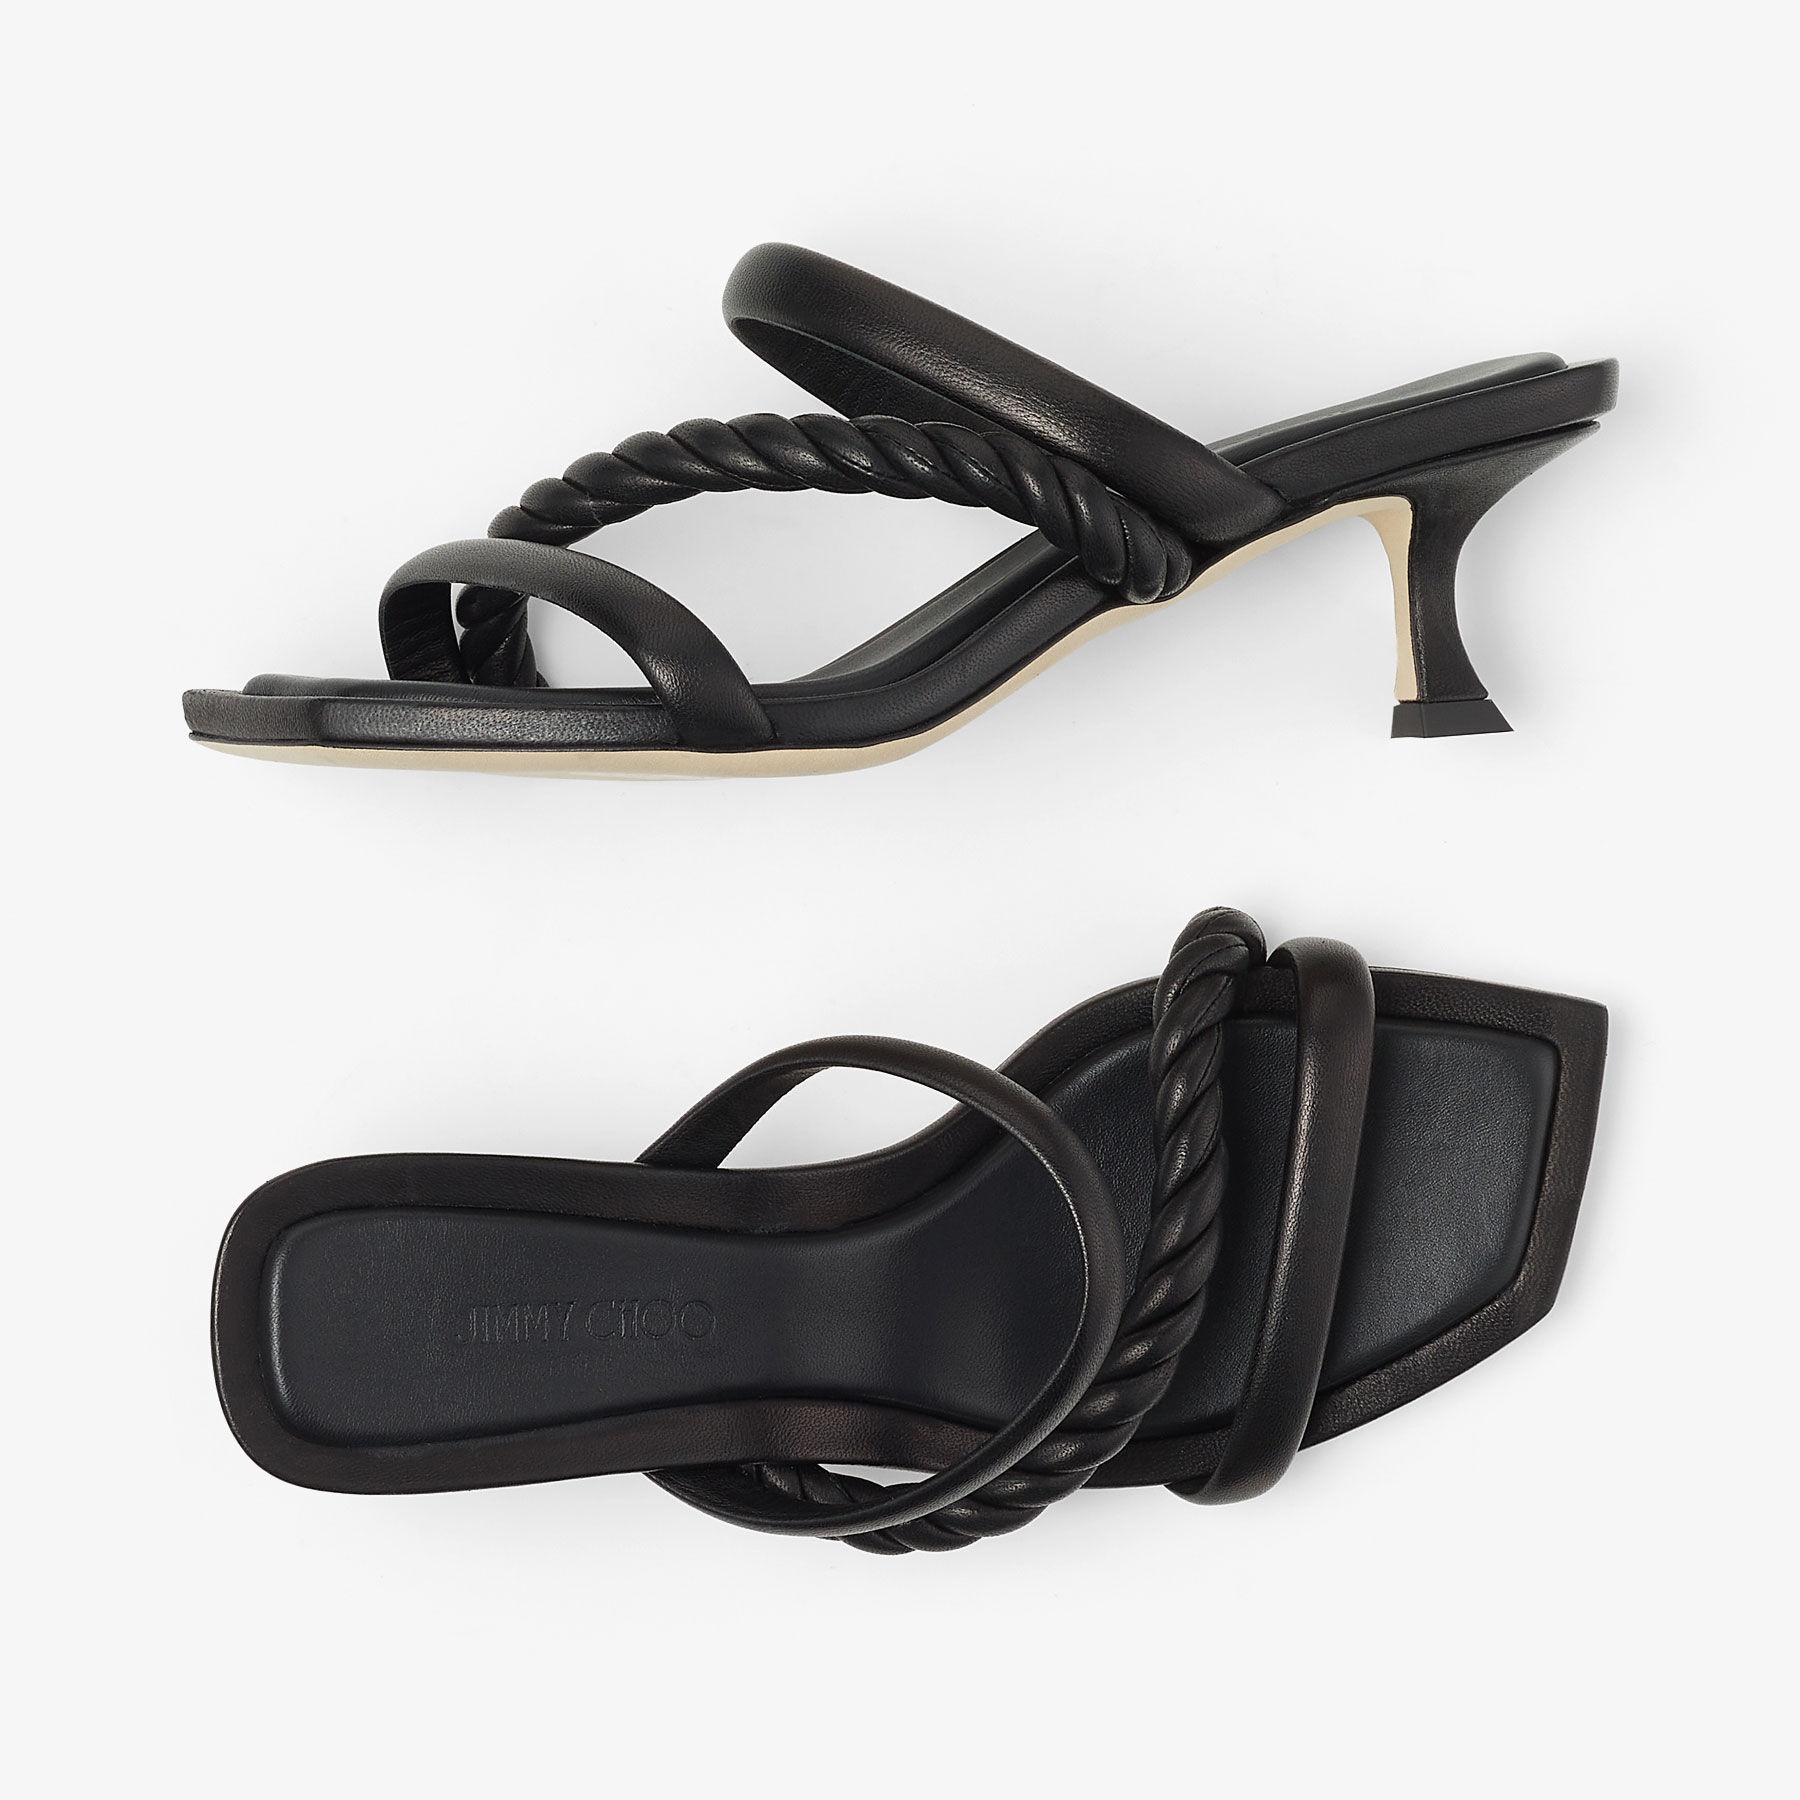 Diosa 50
Black Leather Sandals - 5